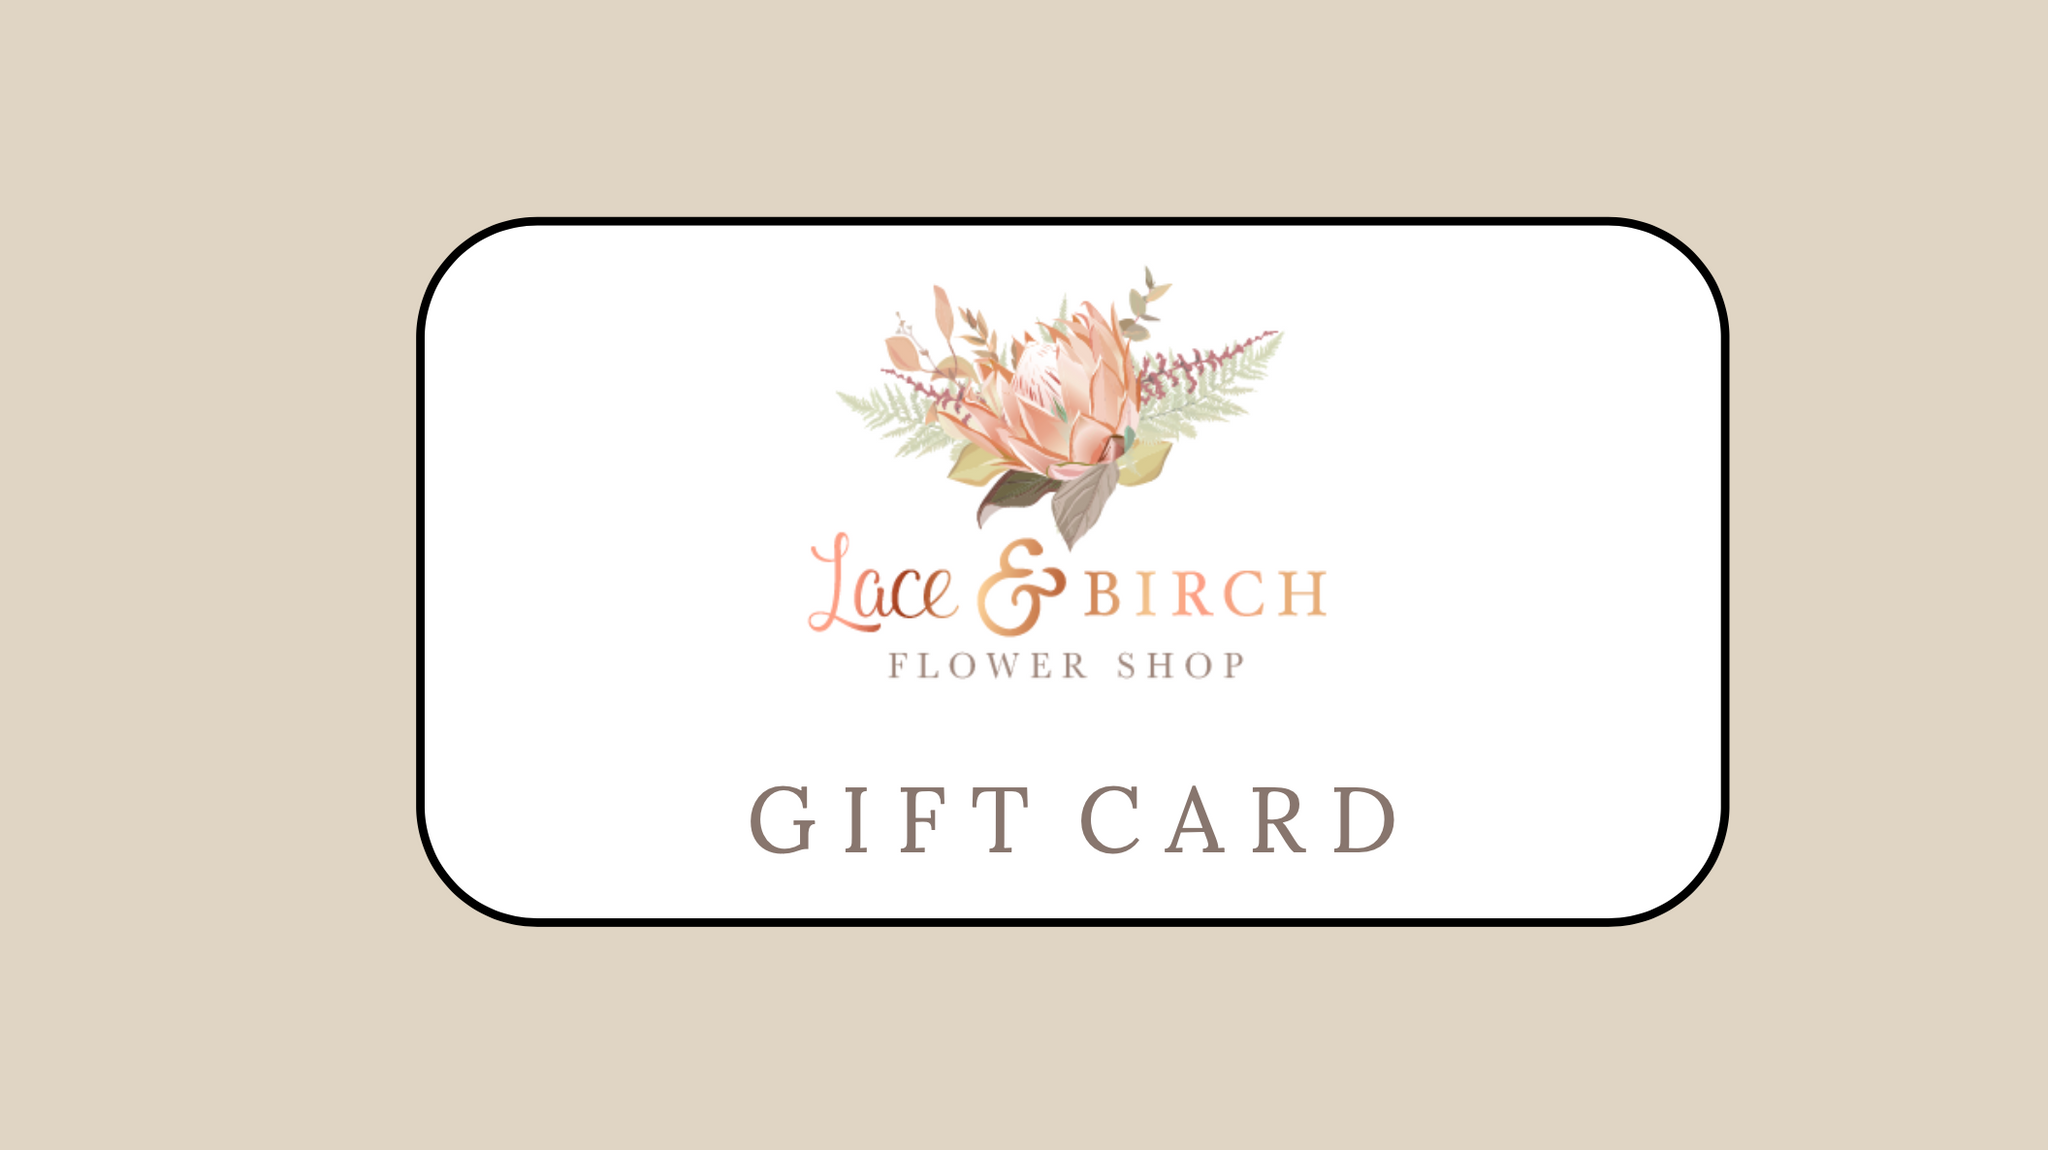 Lace & BIRCH Flower Shop Gift Card